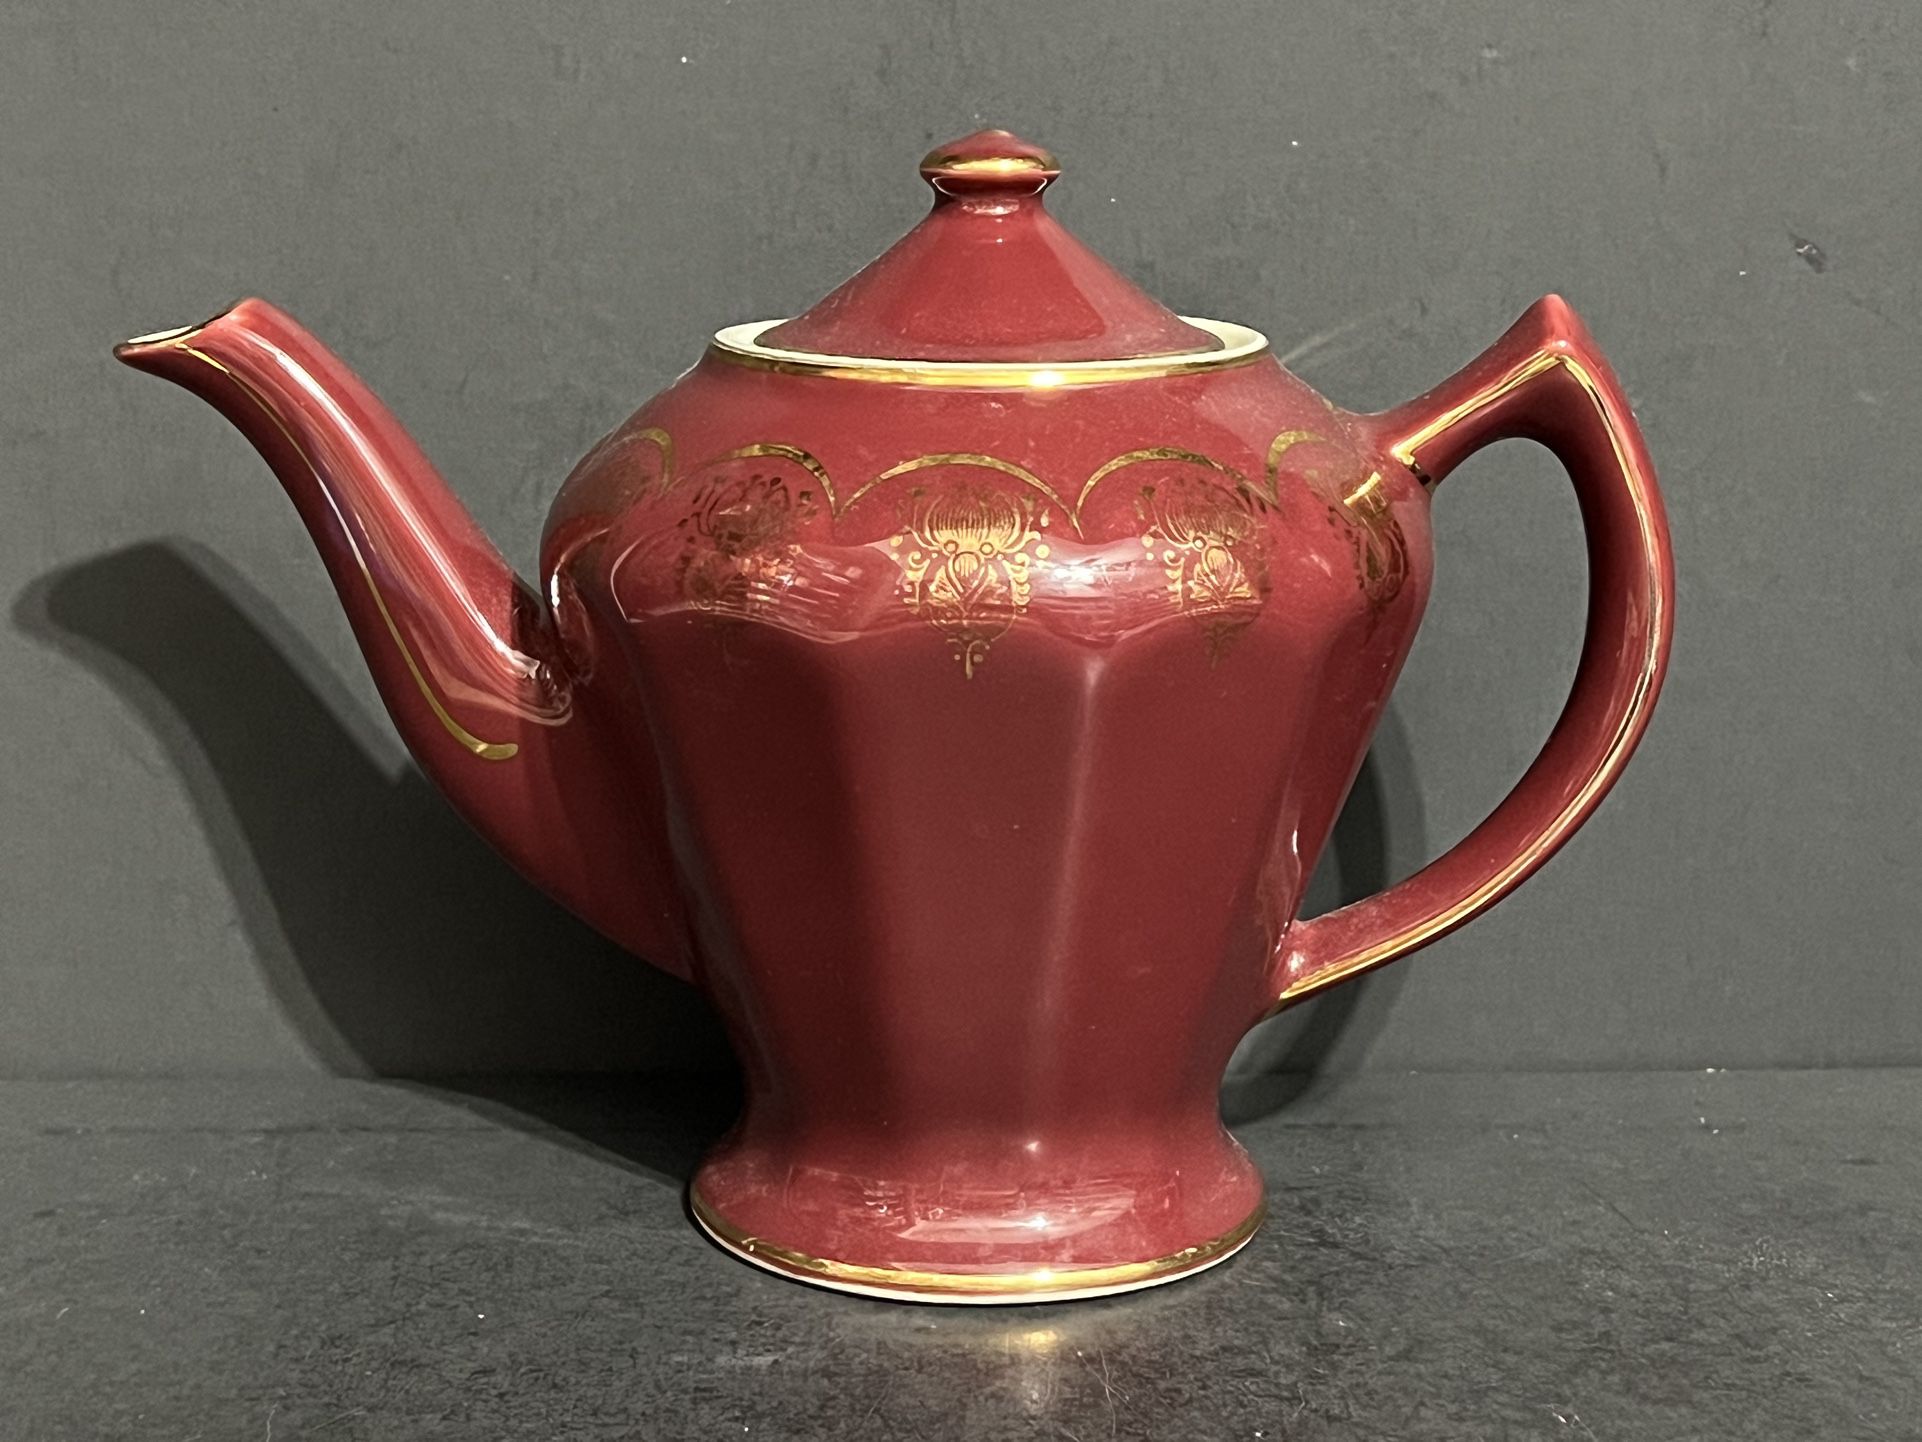 Hall Albany Tea Pot 0233 USA Burgundy With Gold Trim Glazed Ceramic 6 Cup (loc P-14-1)